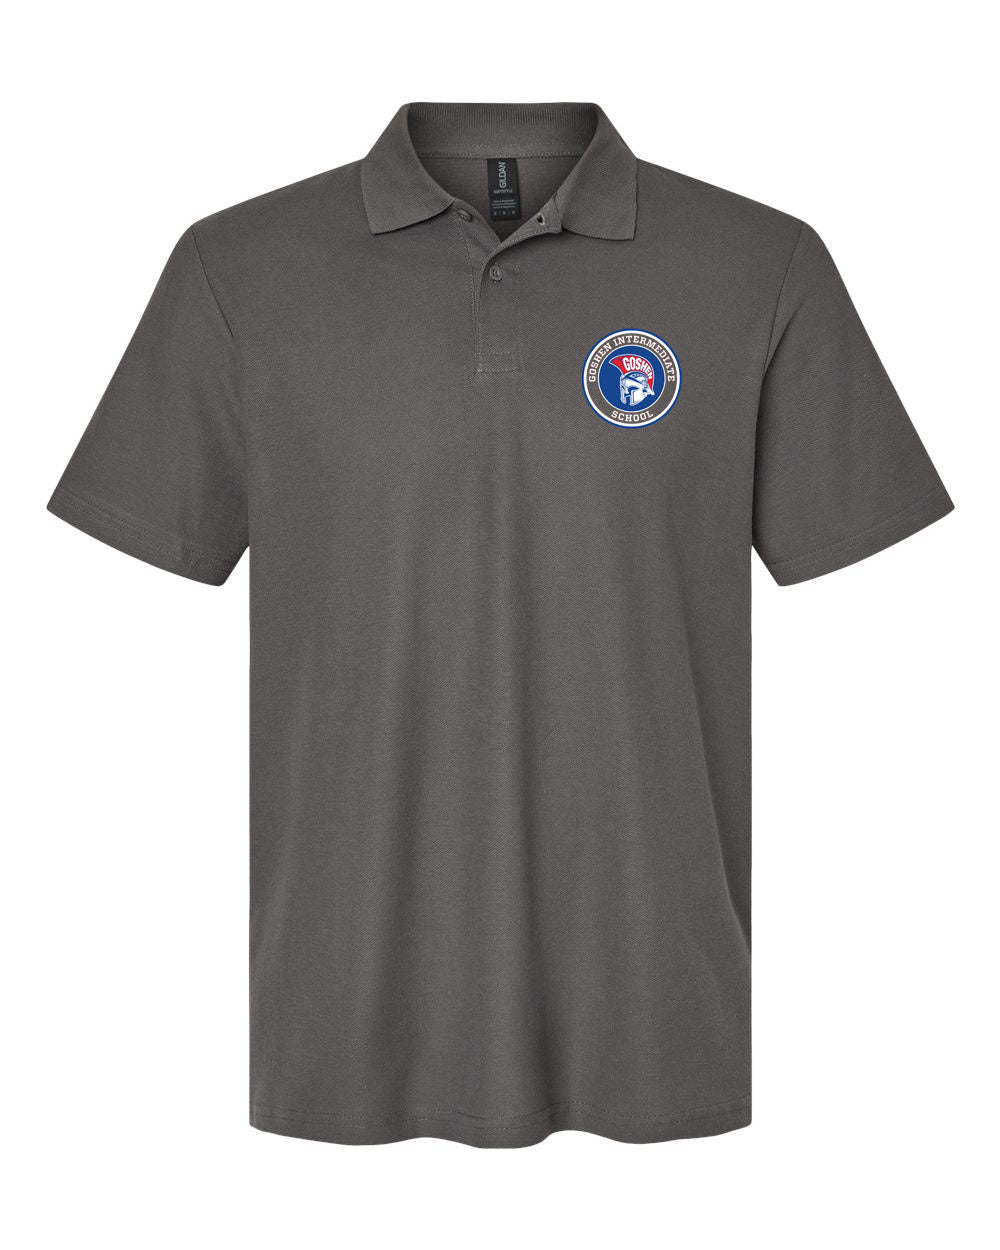 Goshen School Design 1 Polo T-Shirt